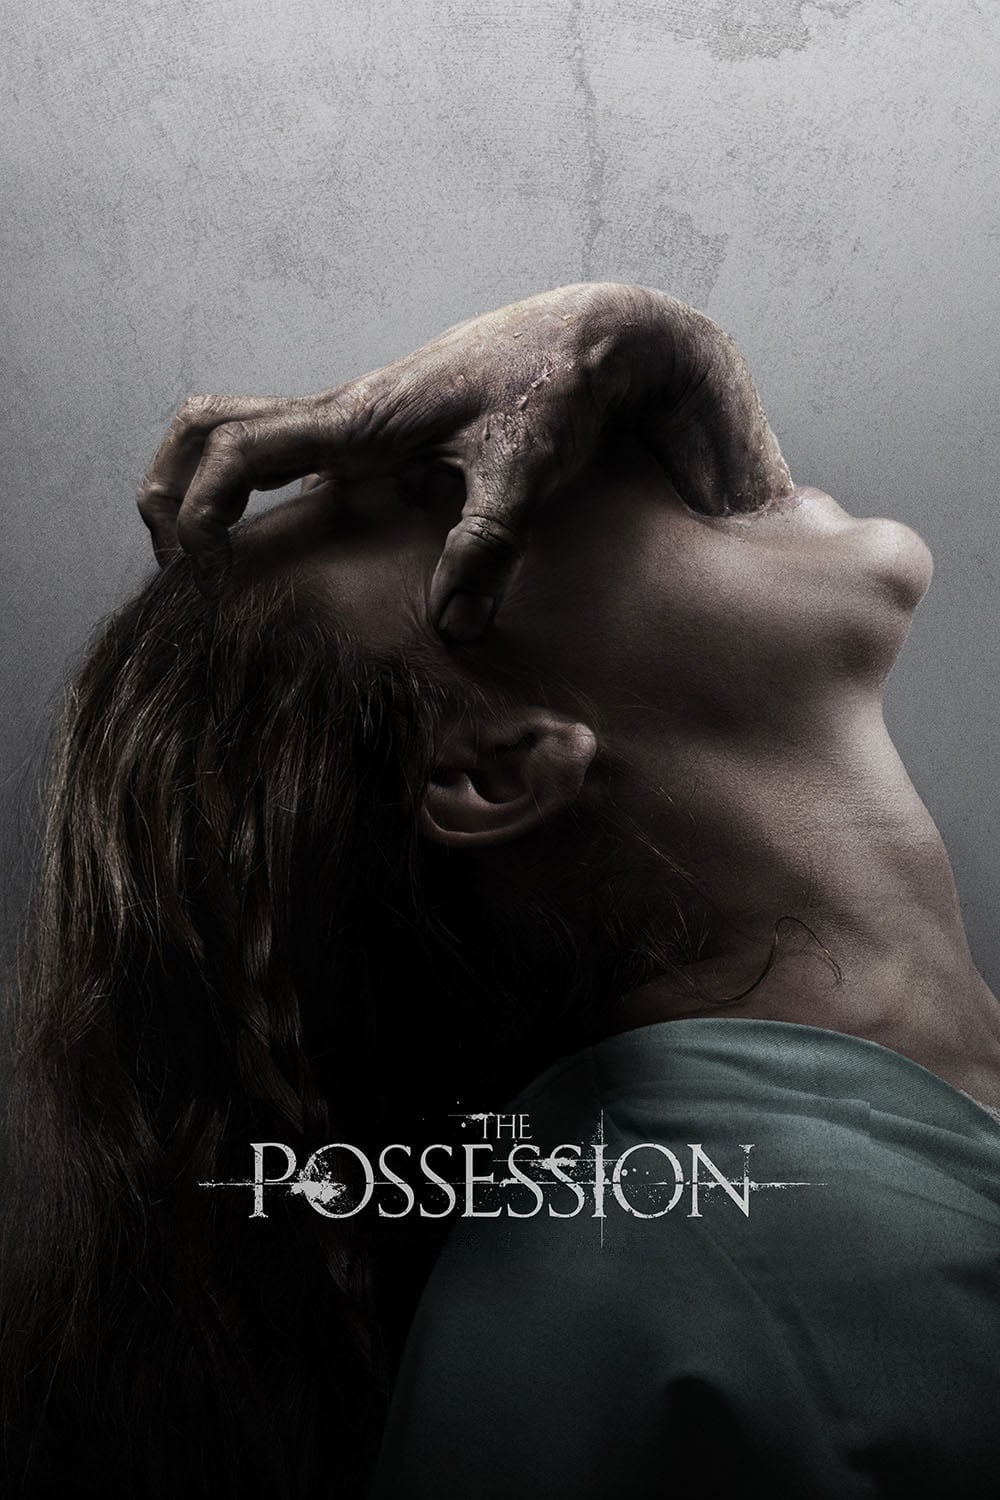 The Possession (El origen del mal)